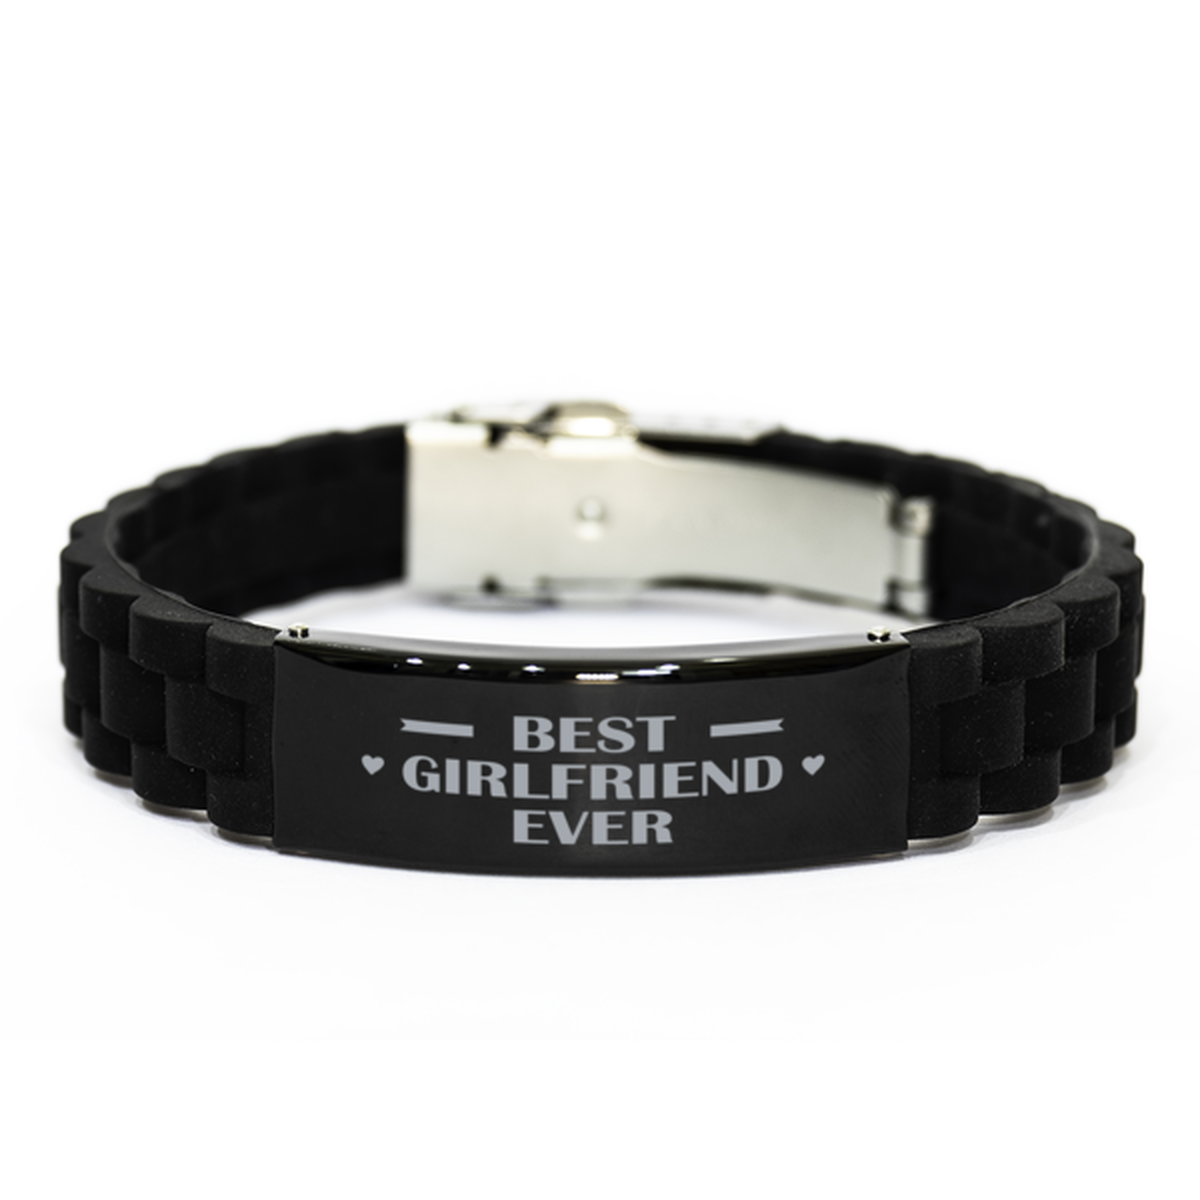 Best Girlfriend Ever Girlfriend Gifts, Funny Black Engraved Bracelet For Girlfriend, Family Gifts For Women